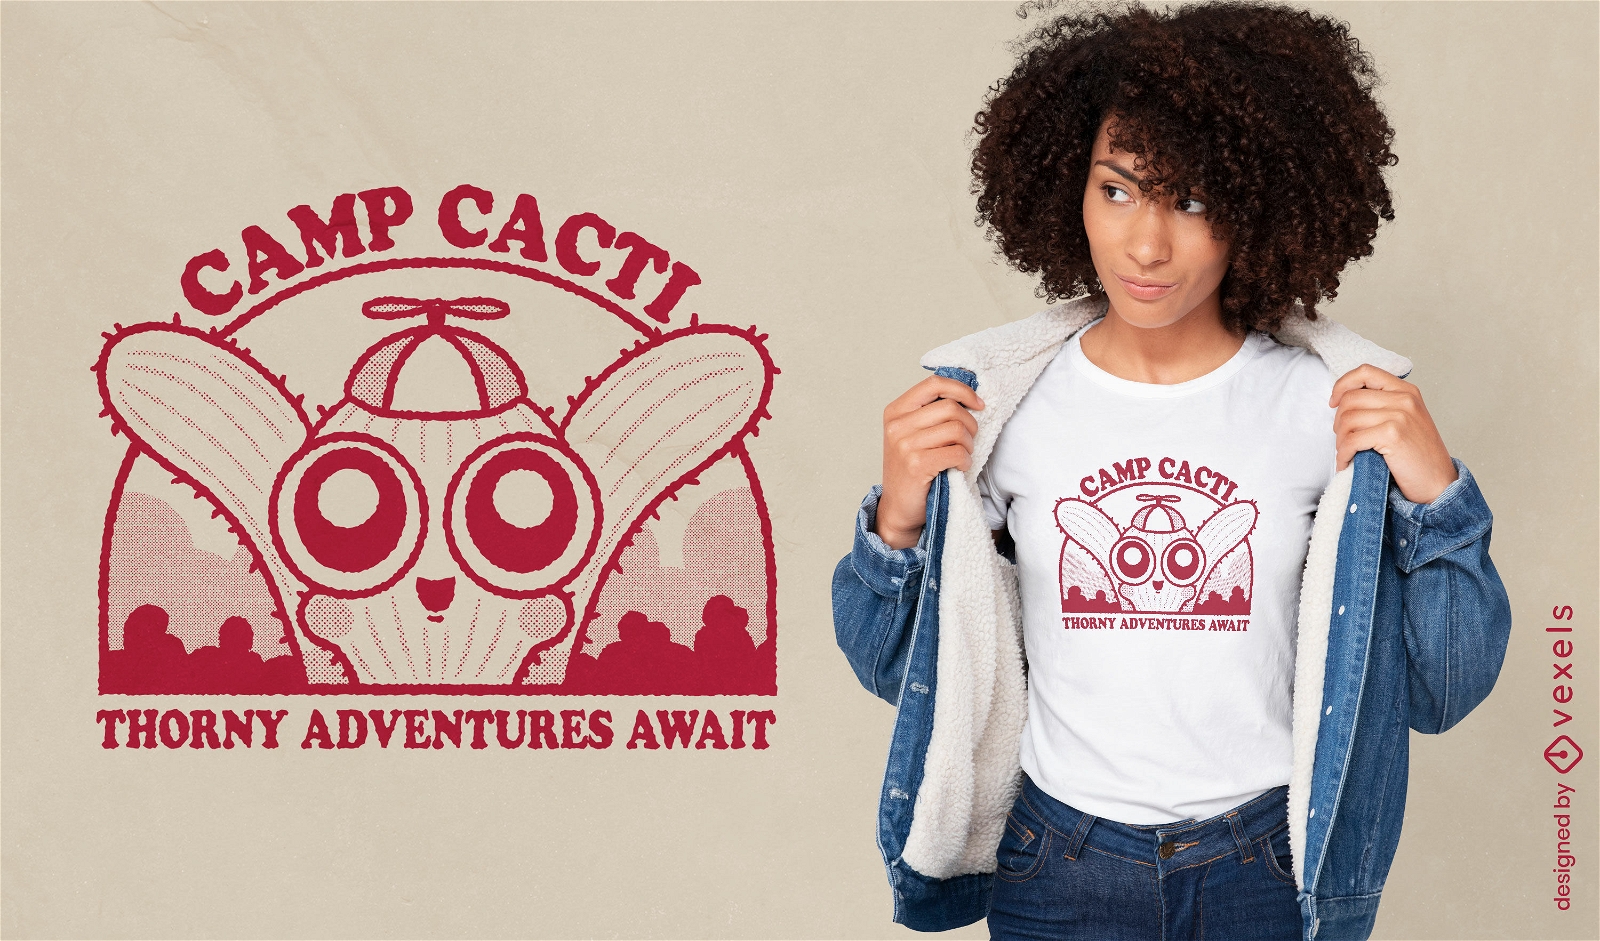 Dise?o de camiseta de campamento de cactus aventureros.